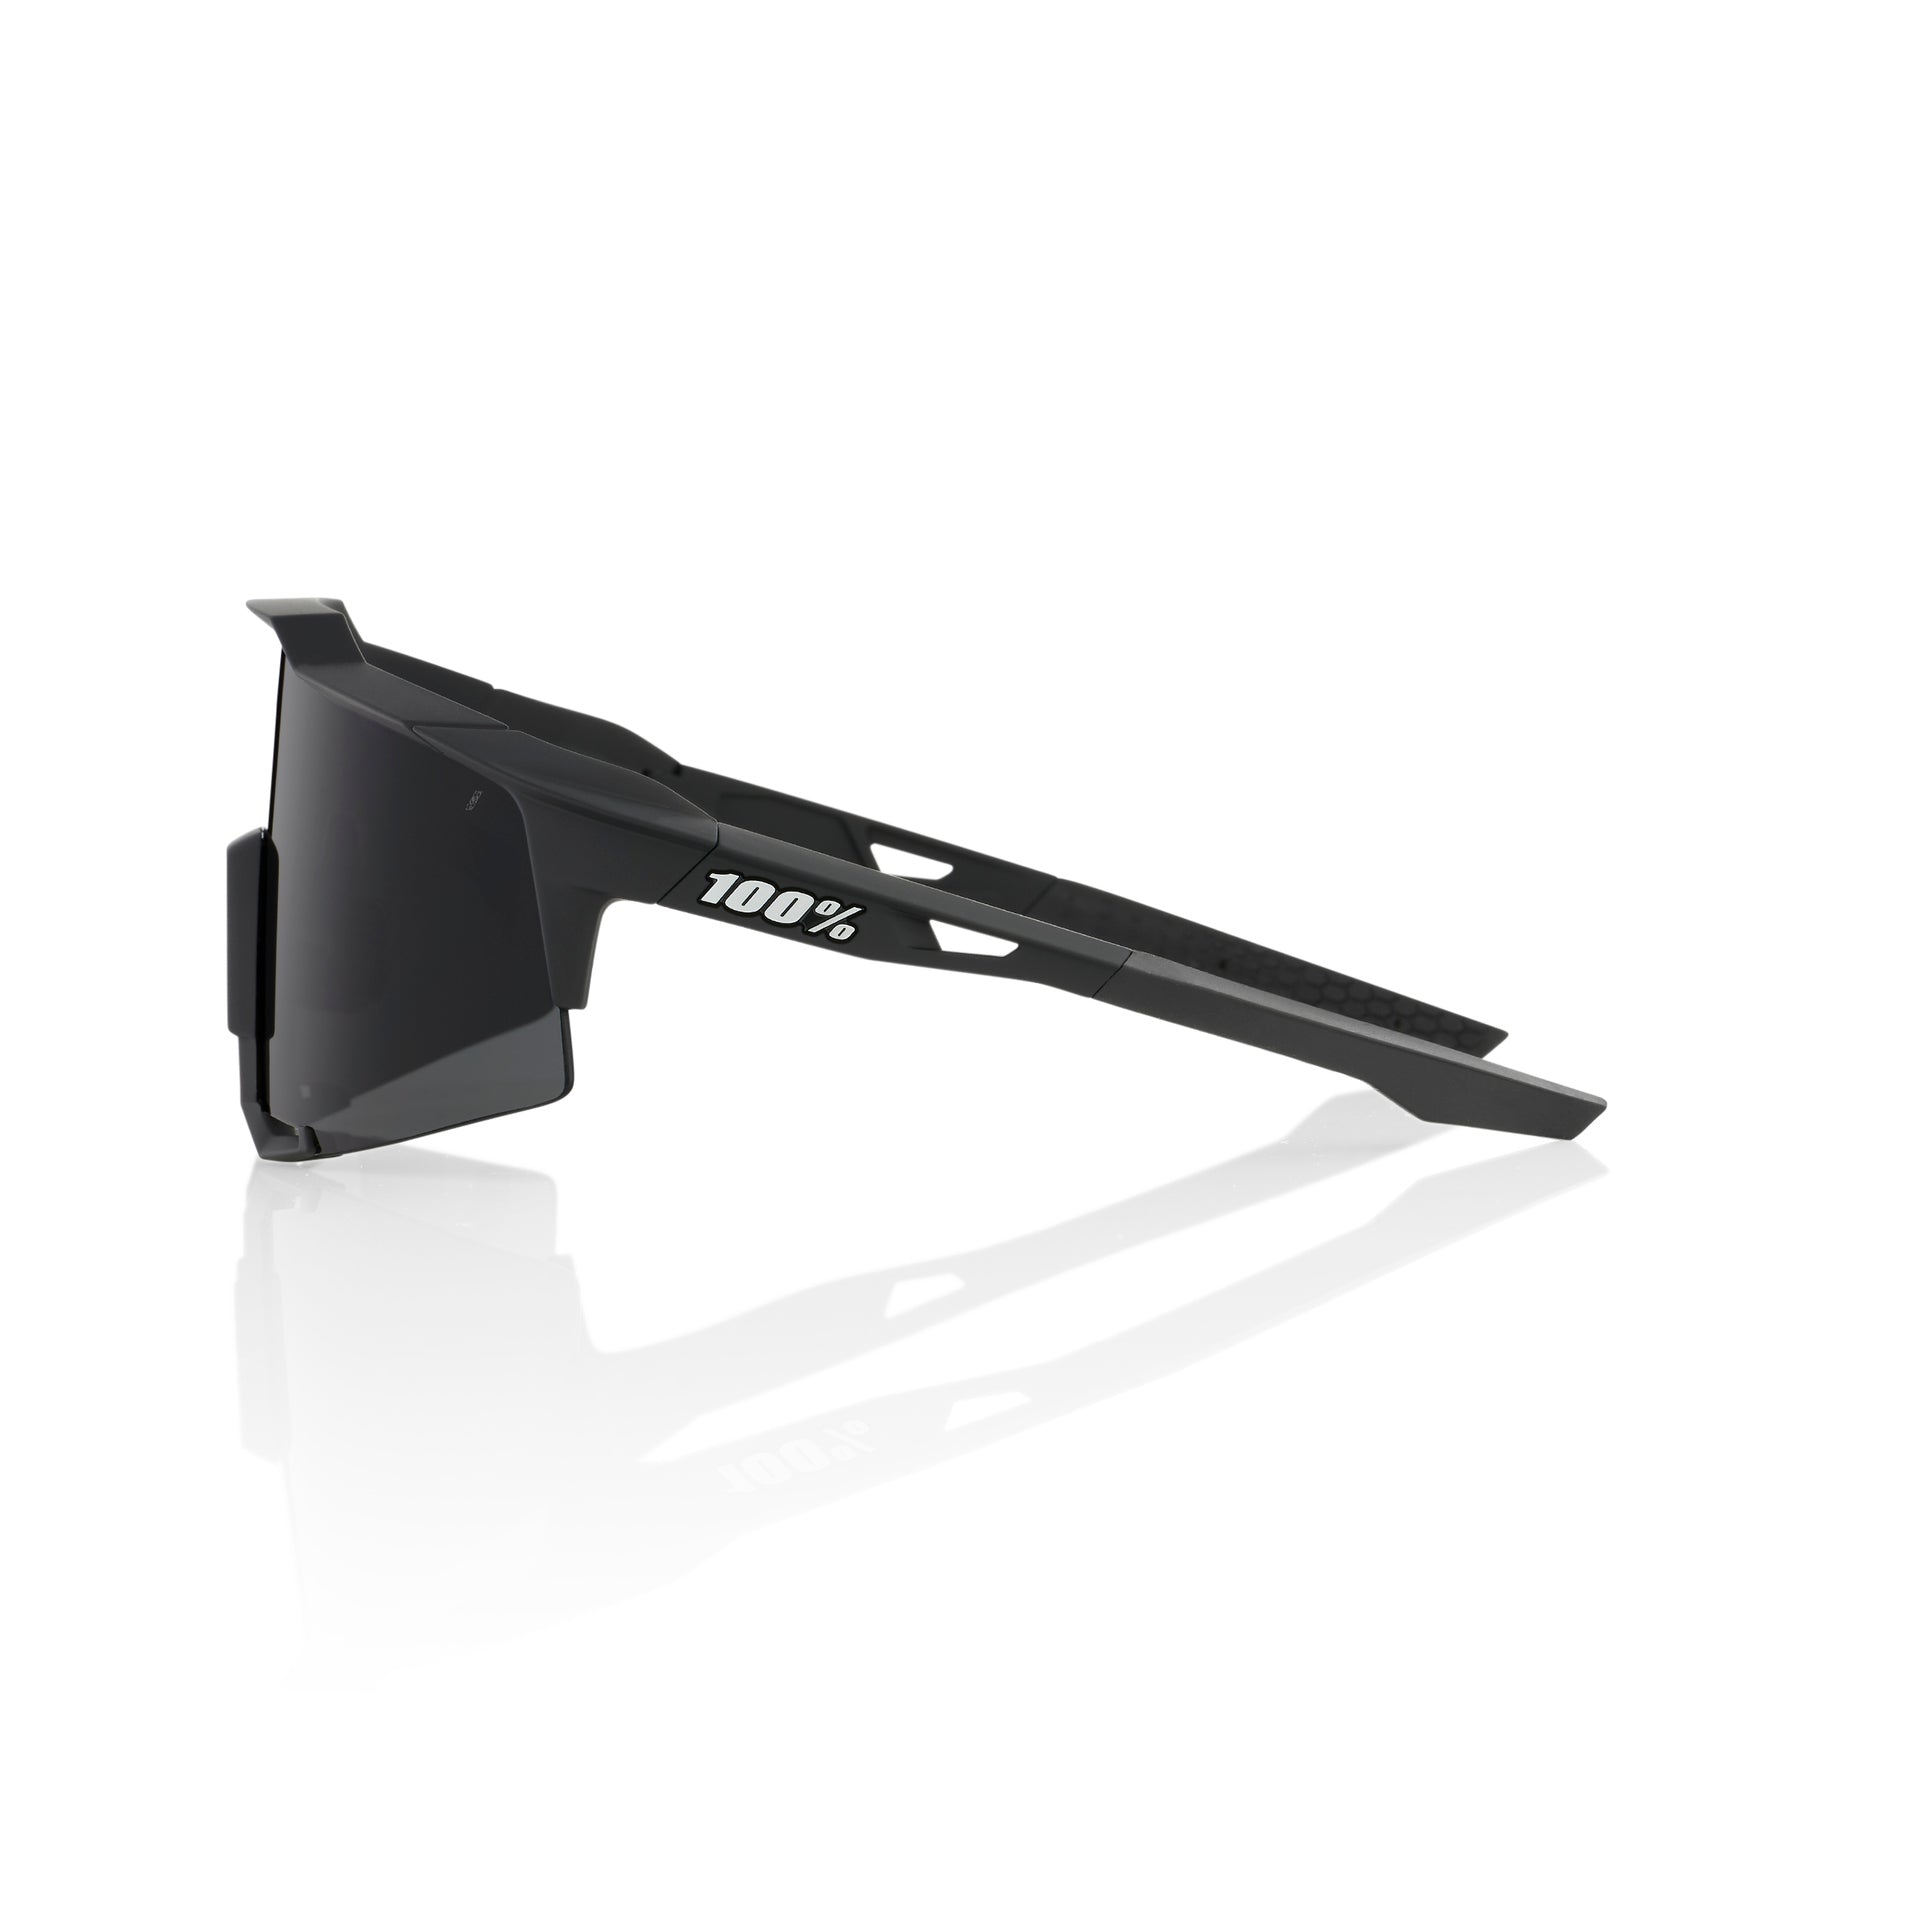 100-glasses-speedcraft-soft-tact-black-with-smoke-lens